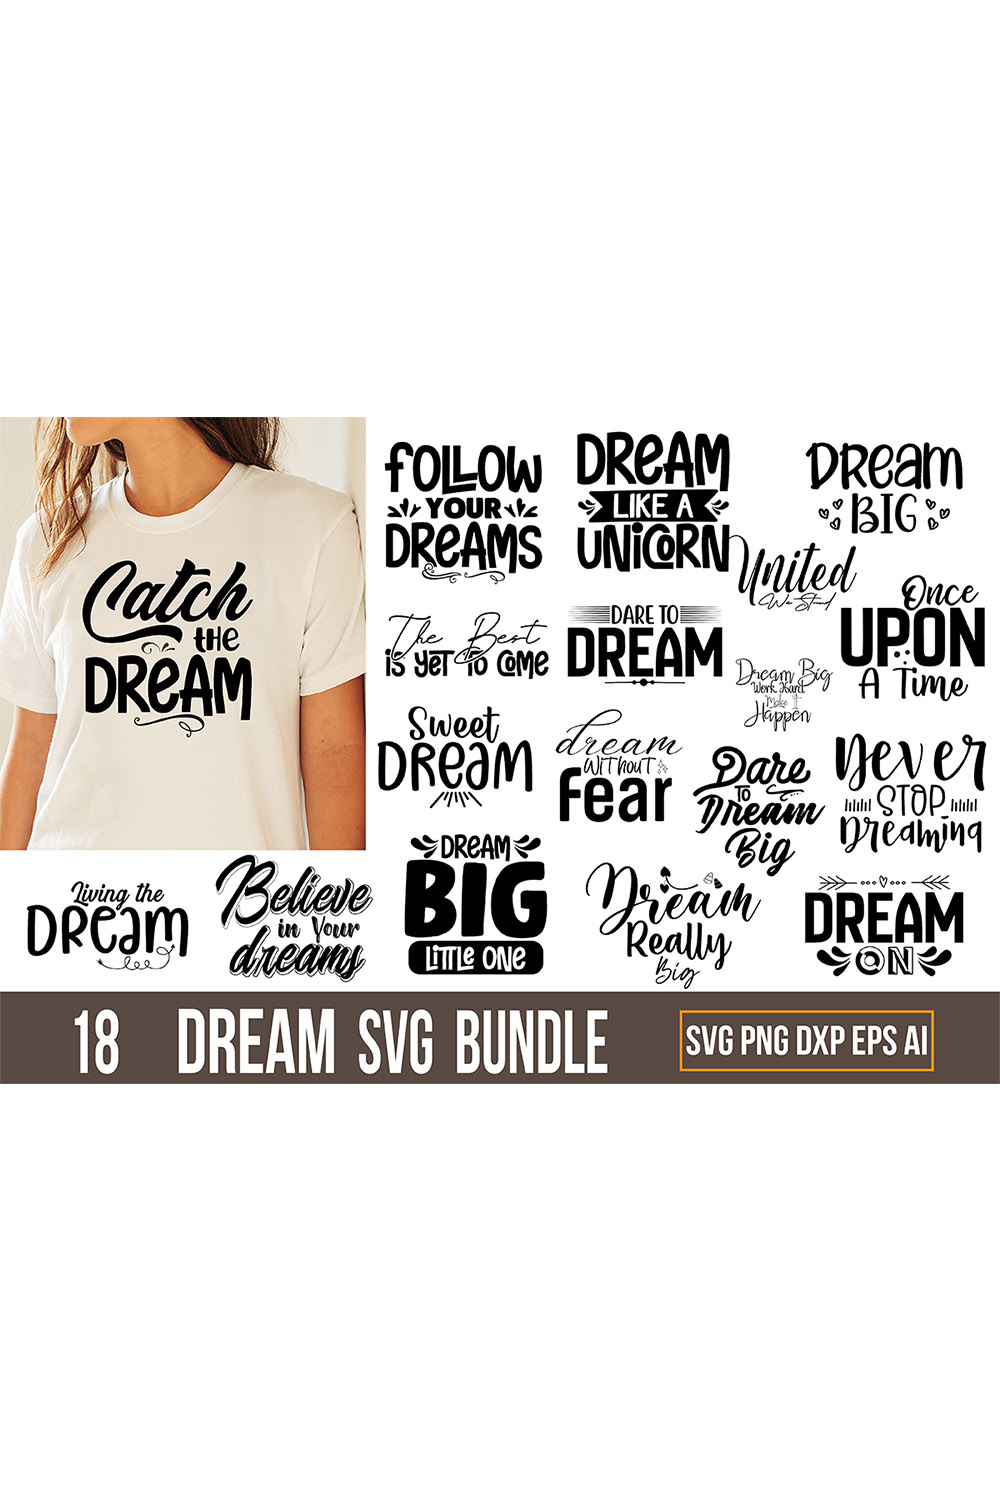 Typography T-shirt Dreams Design SVG Bundle pinterest image.